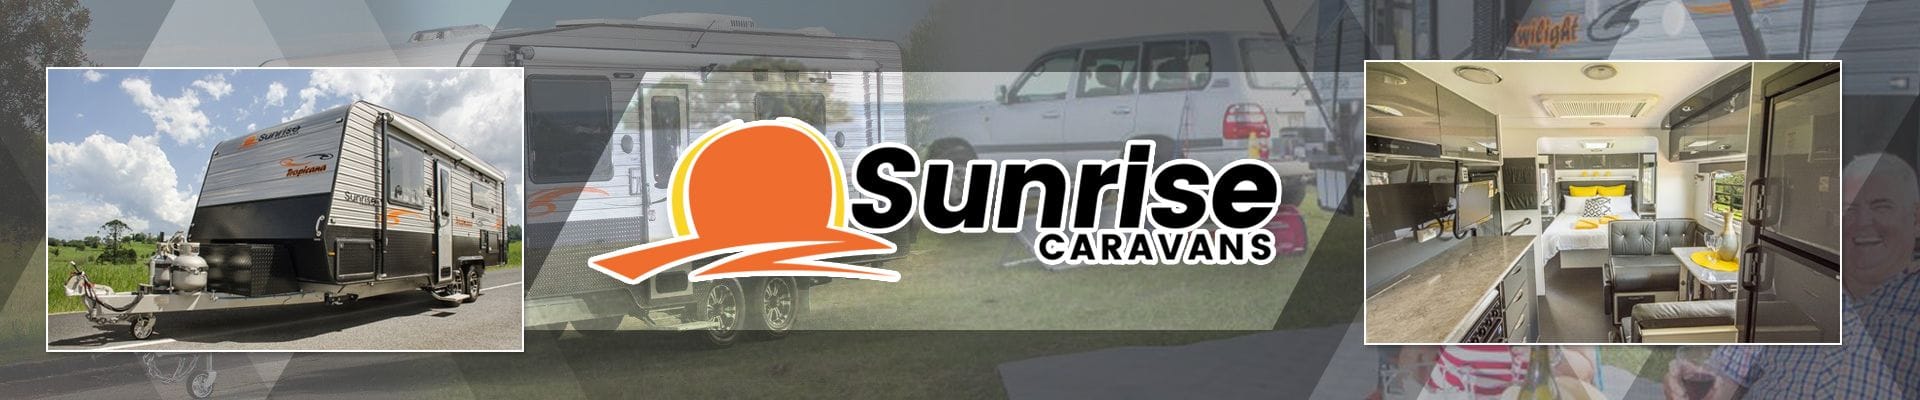 Sunrise Caravans